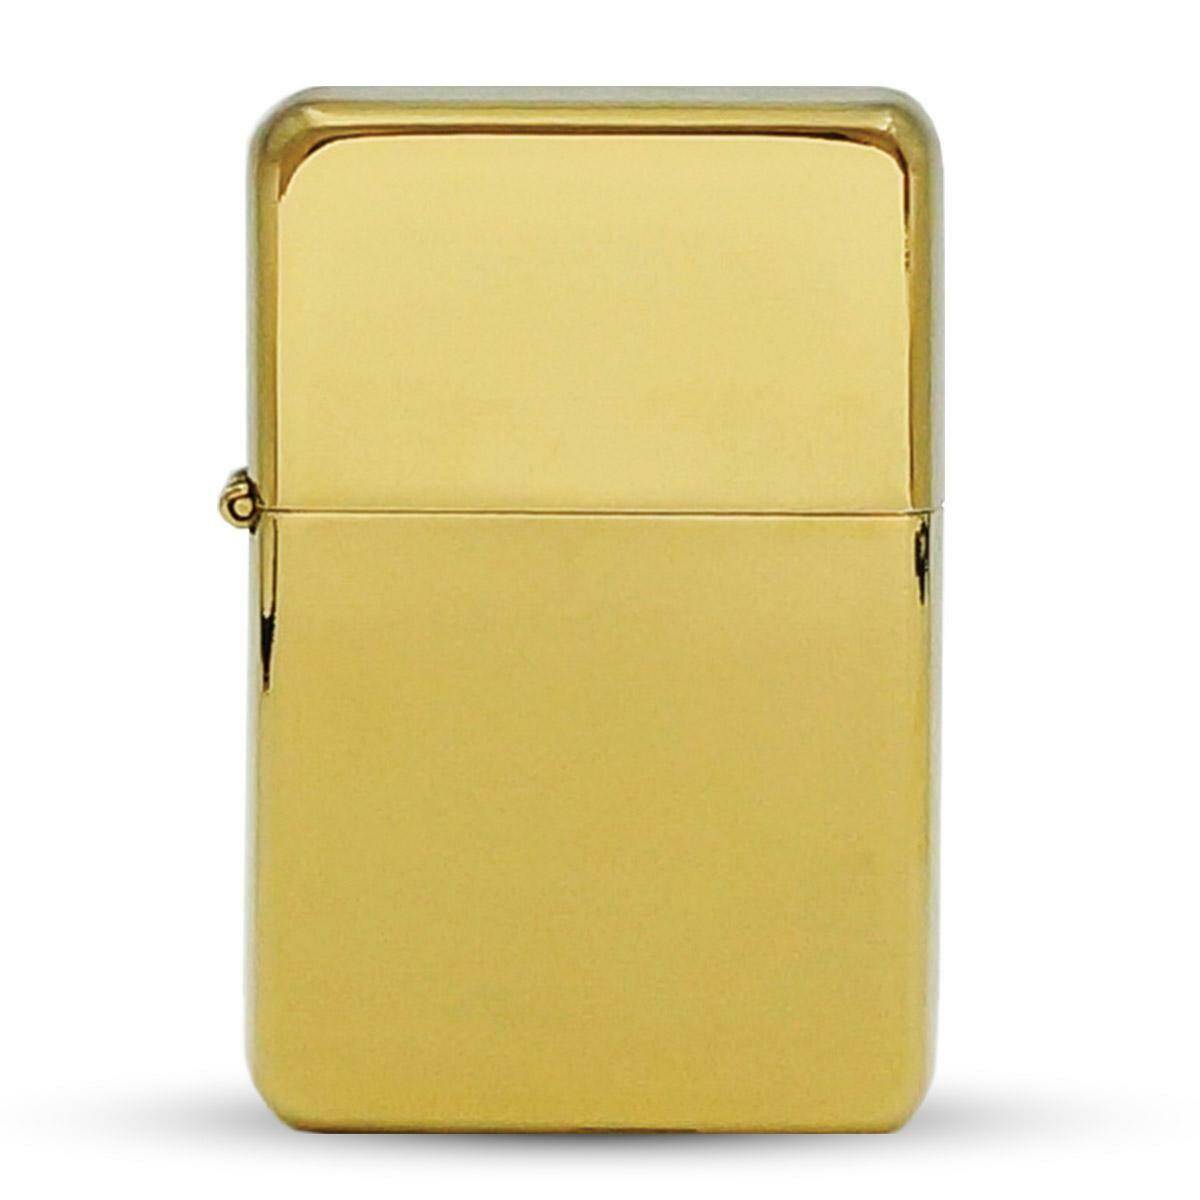 Gasoline lighter - Fummo Gold (Gift Box)